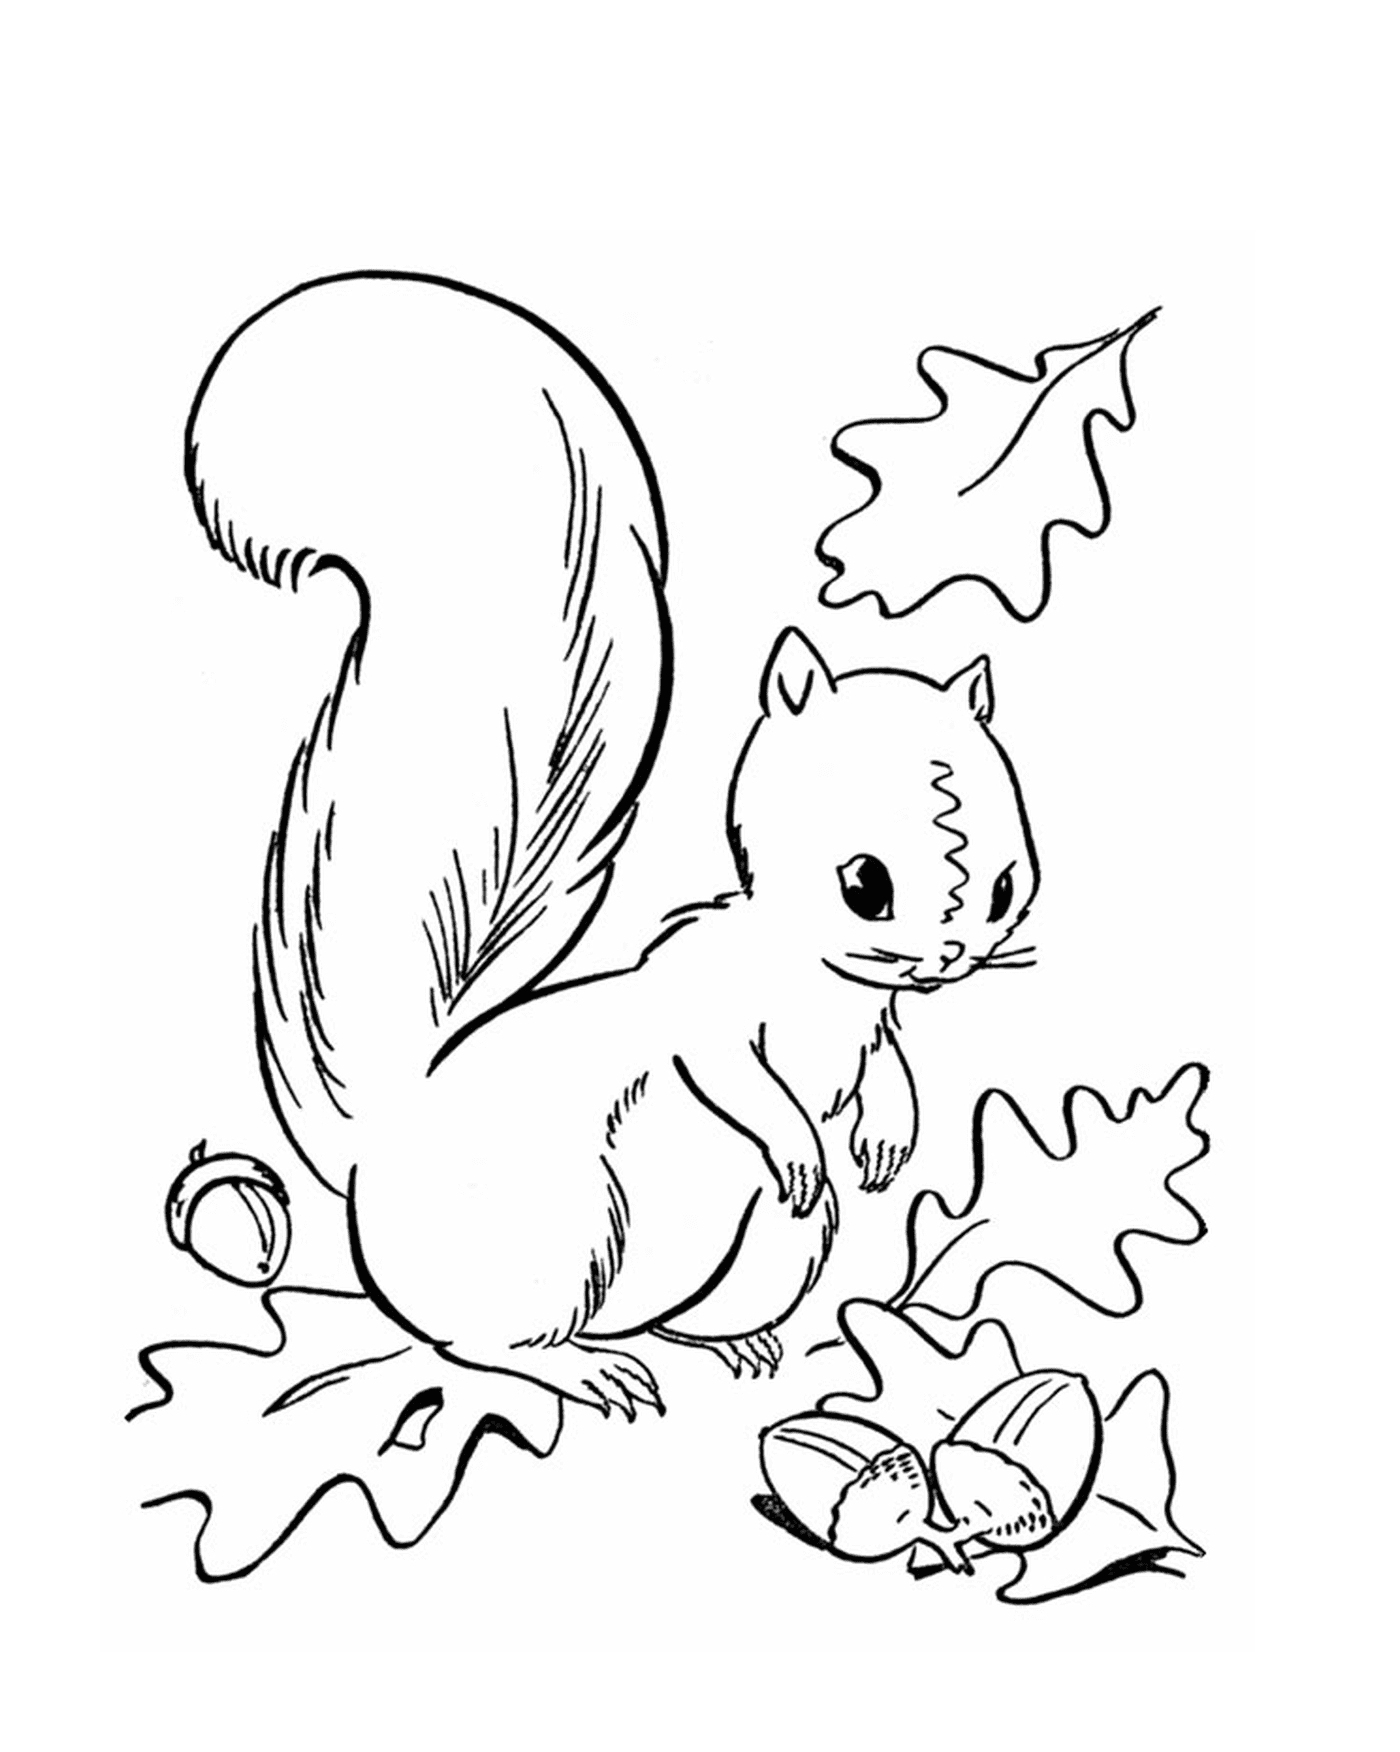  A squirrel 